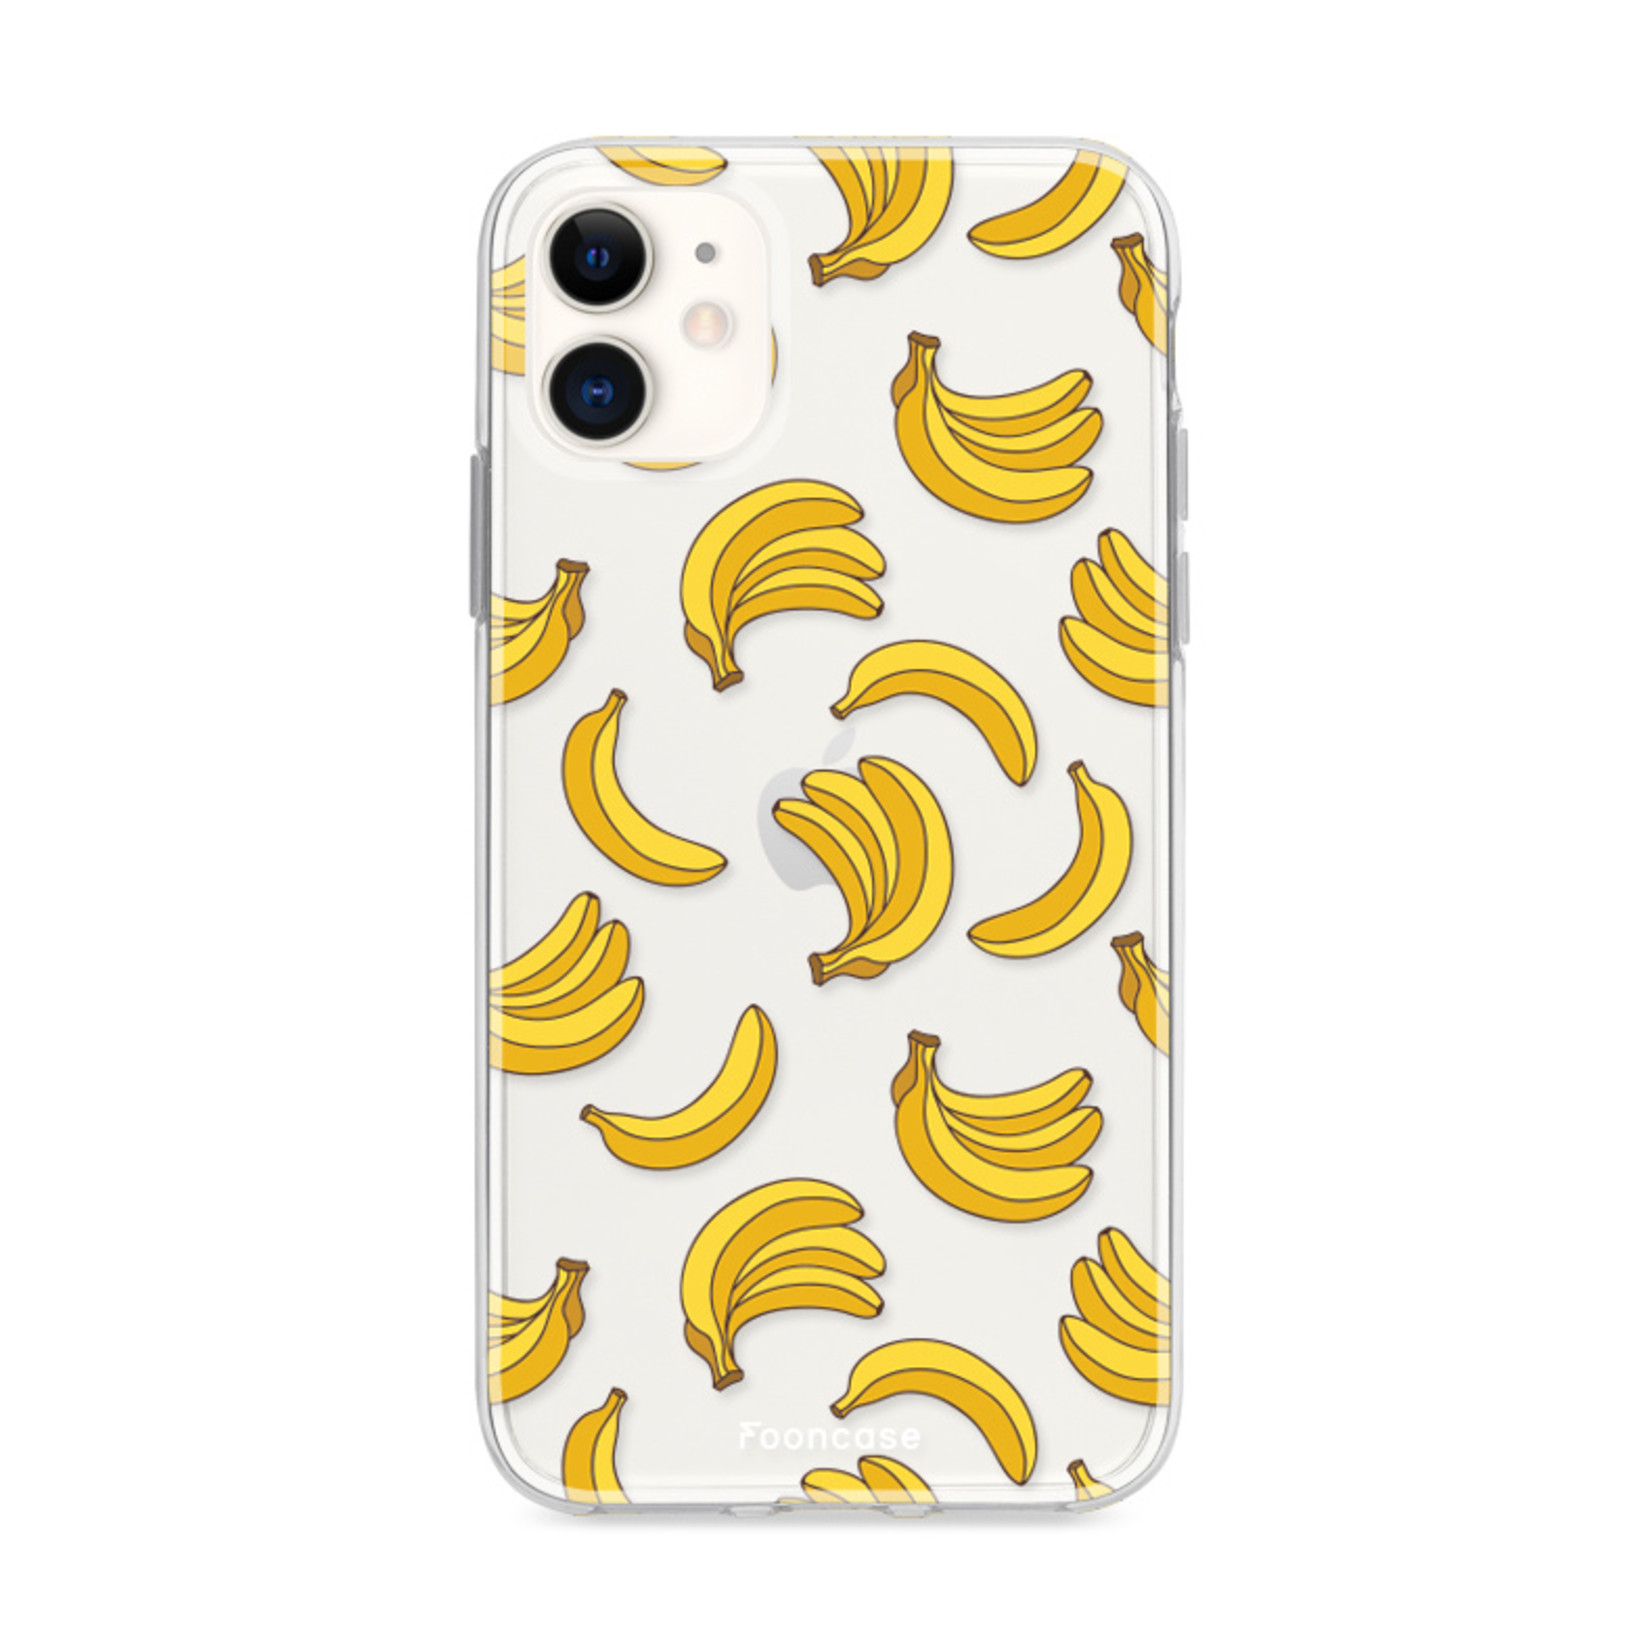 FOONCASE iPhone 12 hoesje TPU Soft Case - Back Cover - Bananas / Banaan / Bananen